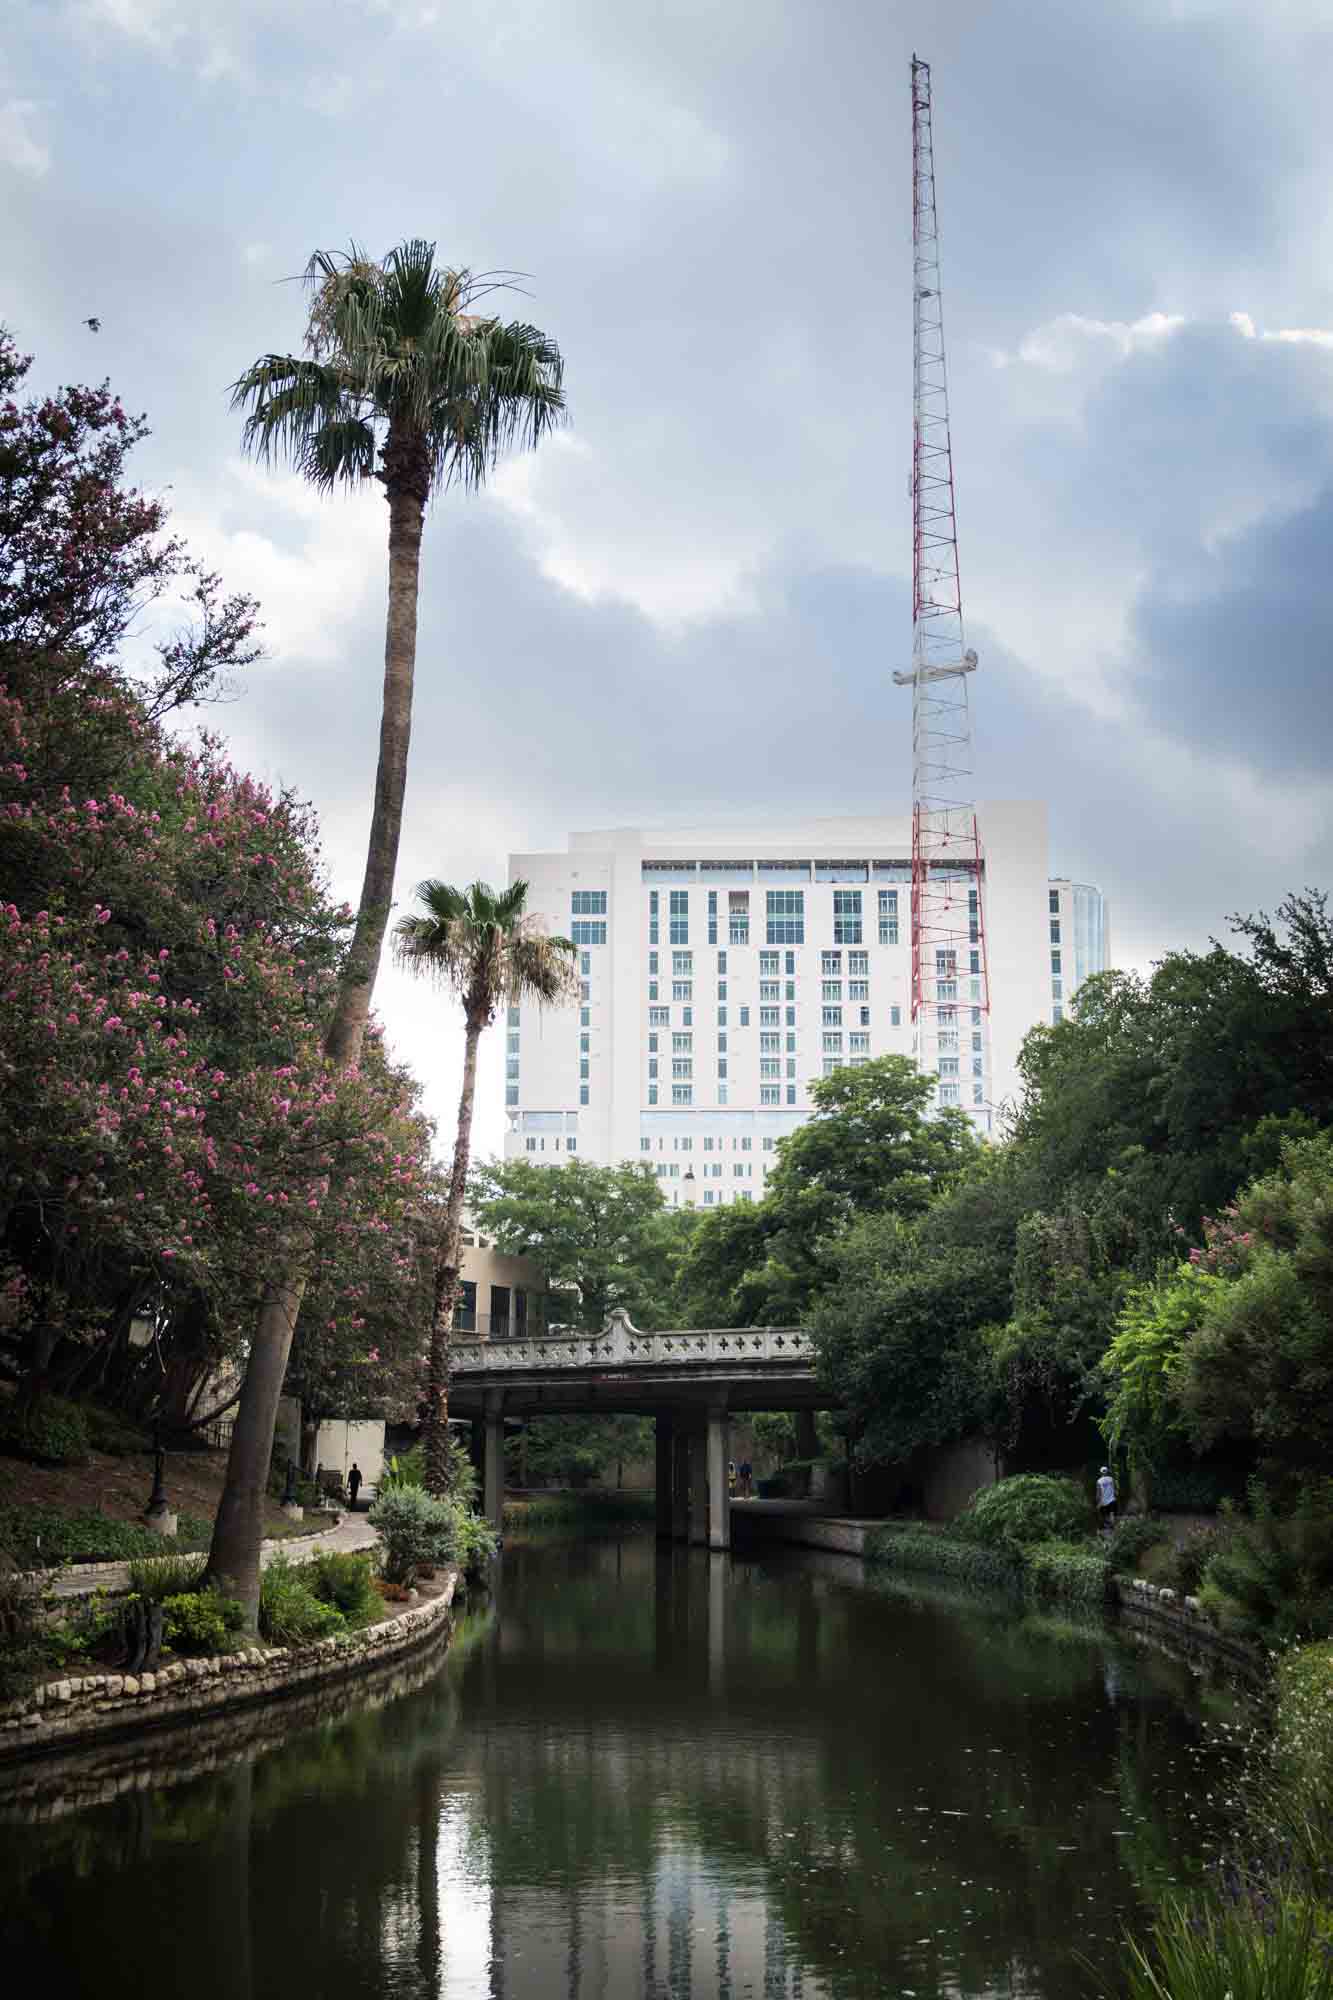 Building and radio tower along the Riverwalk in San Antonio